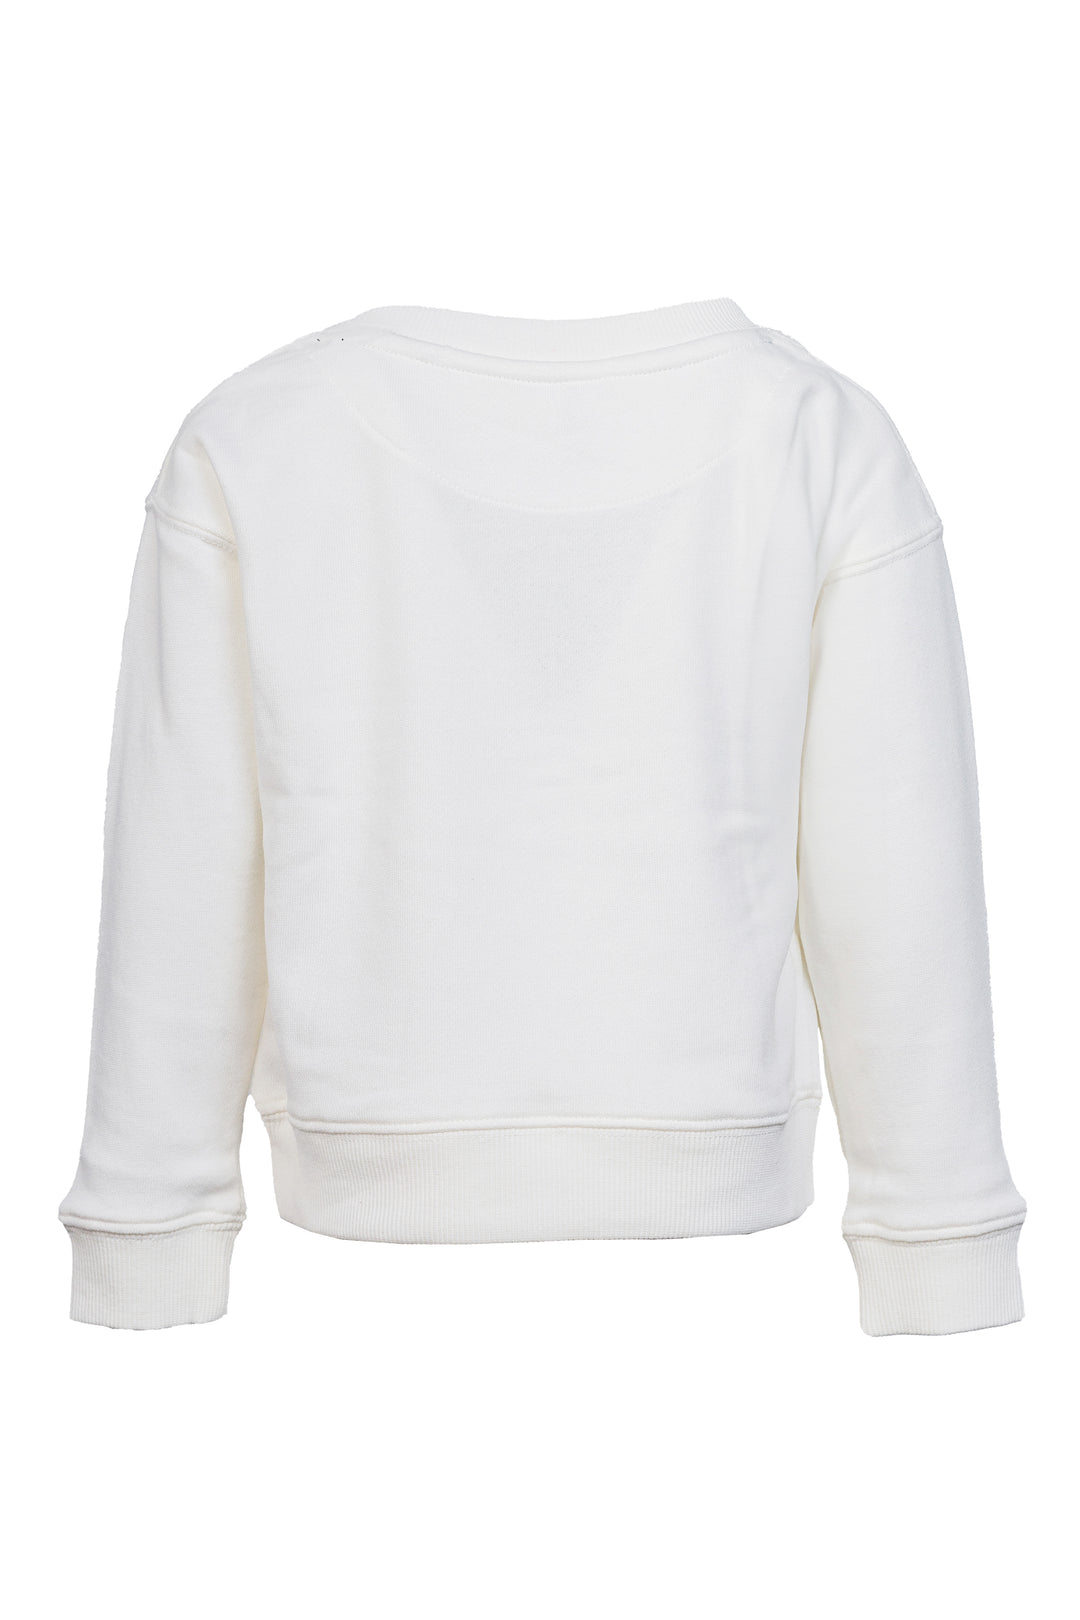 French Cotton Crewneck Sweater [Happy] [Junior]